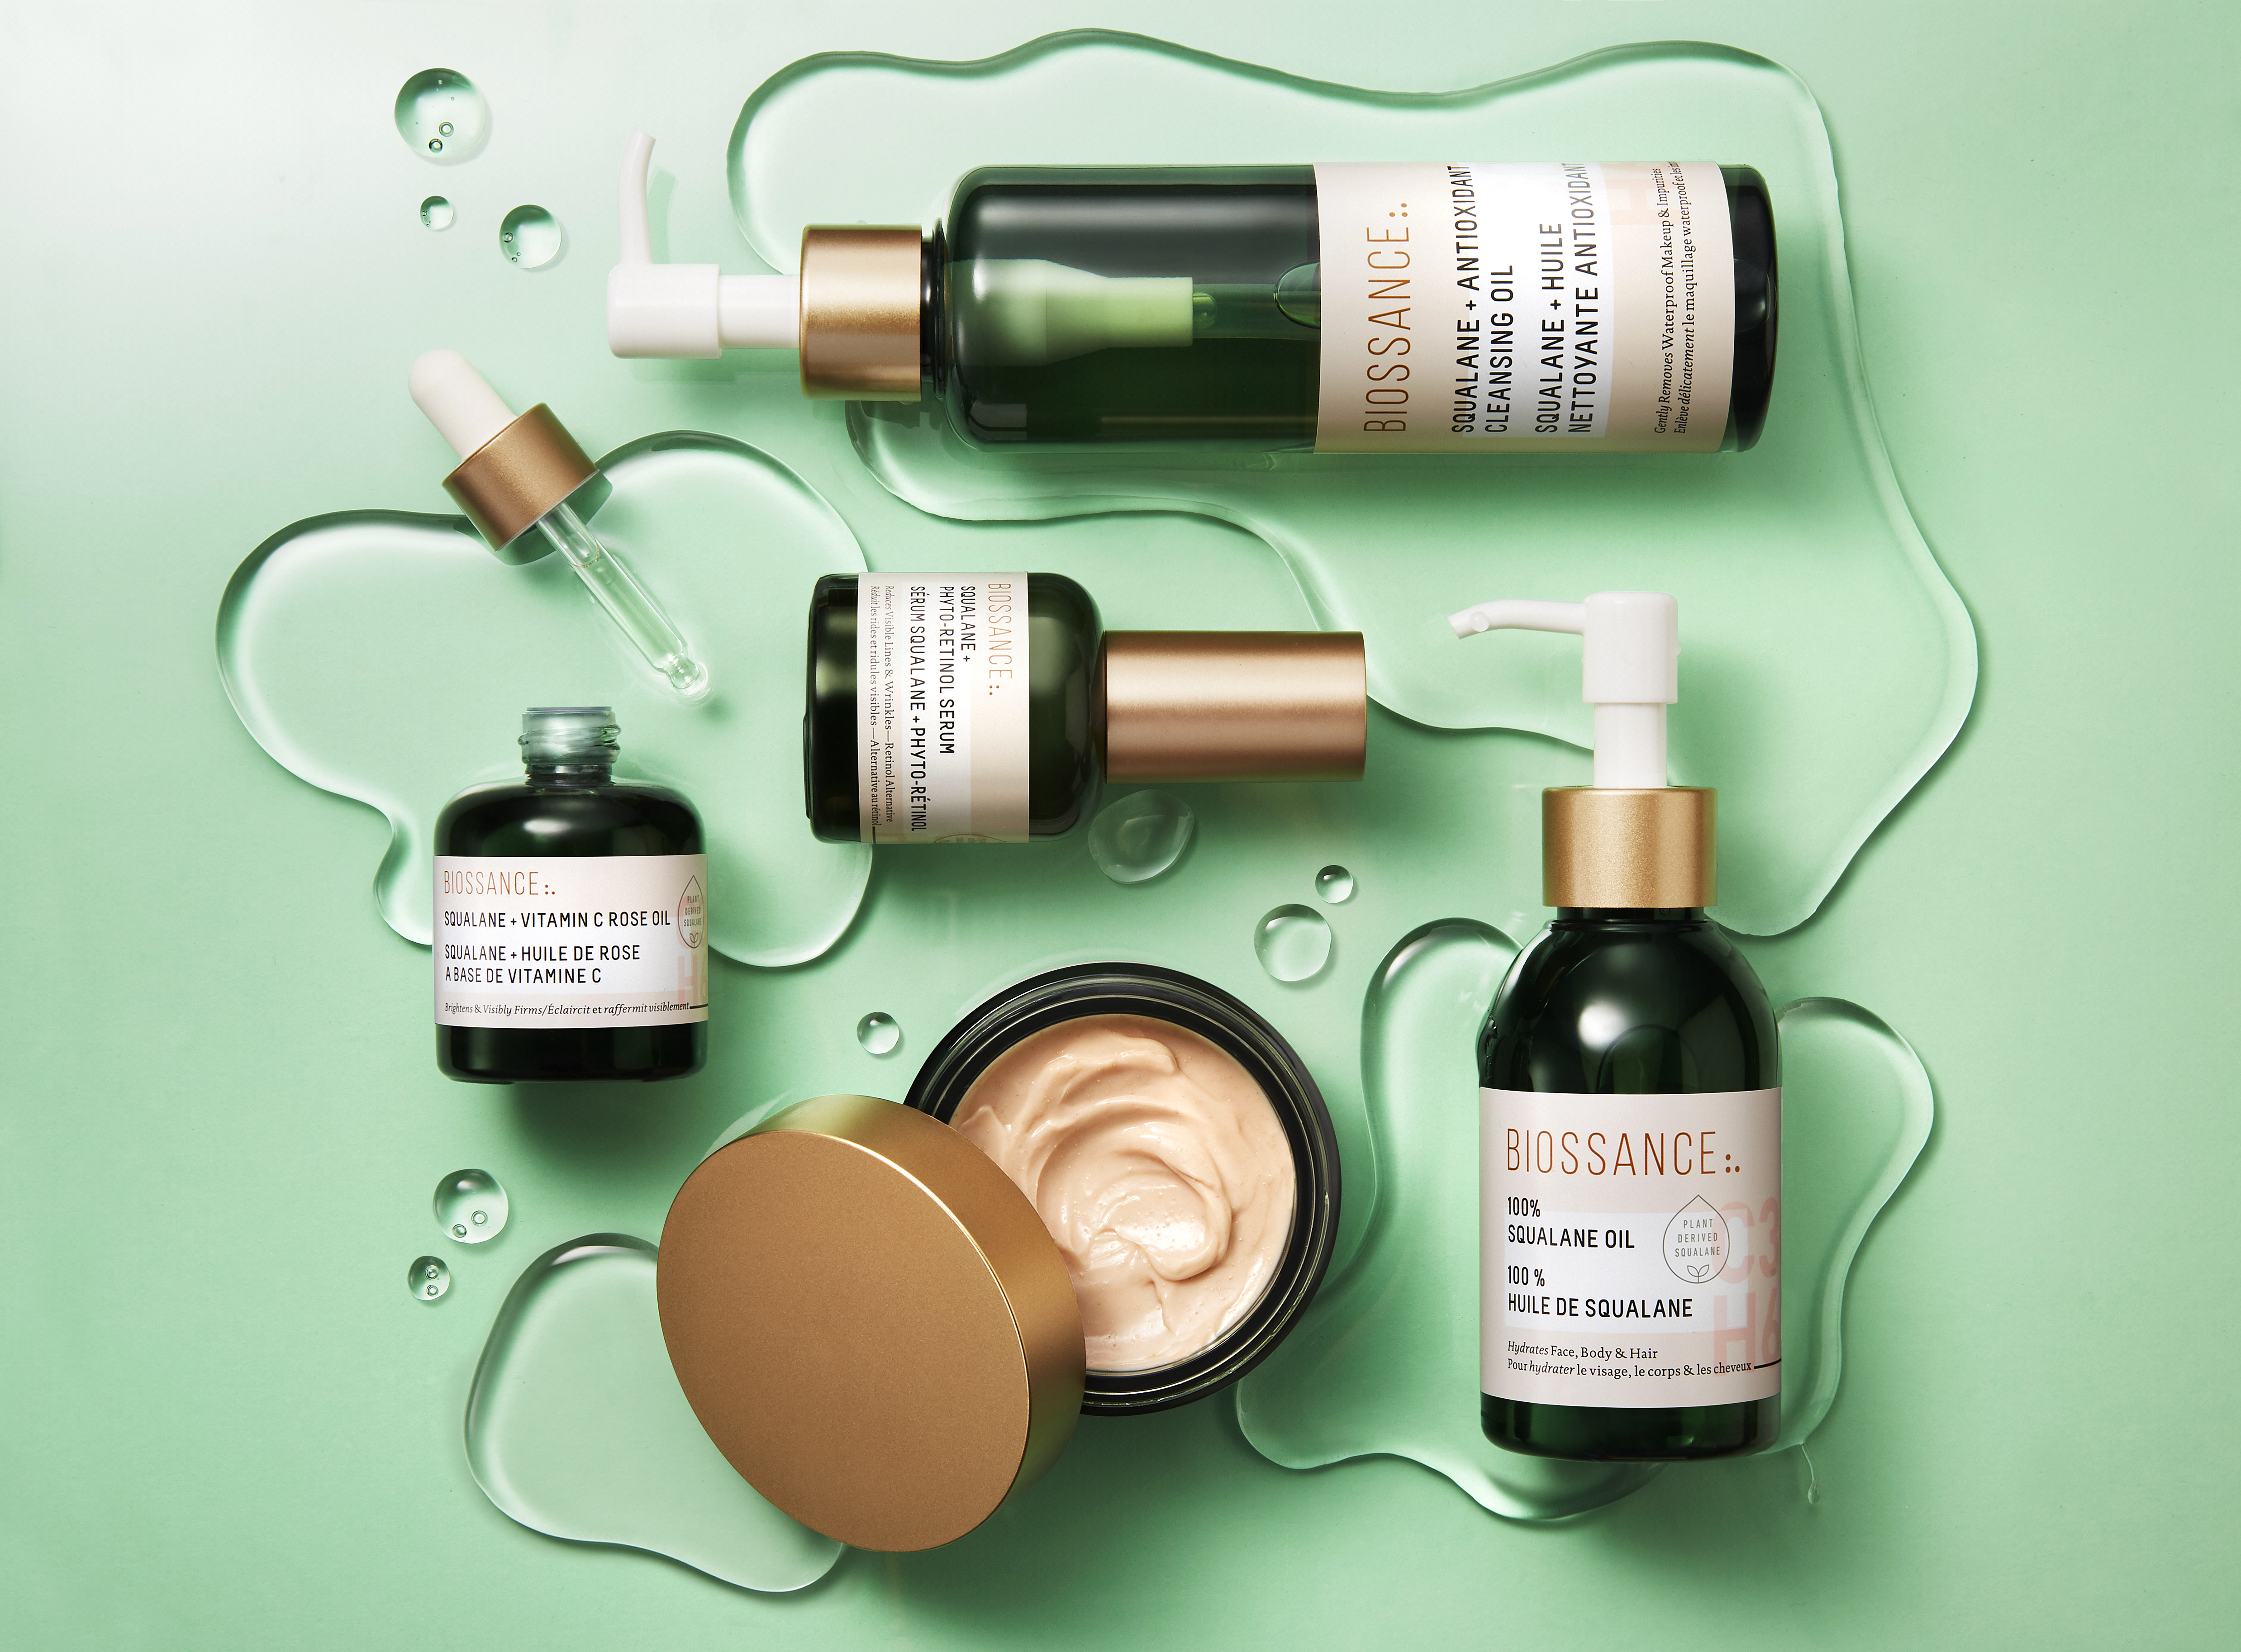 Brands in Amyris' portfolio include ‘clean’ skin care Biossance